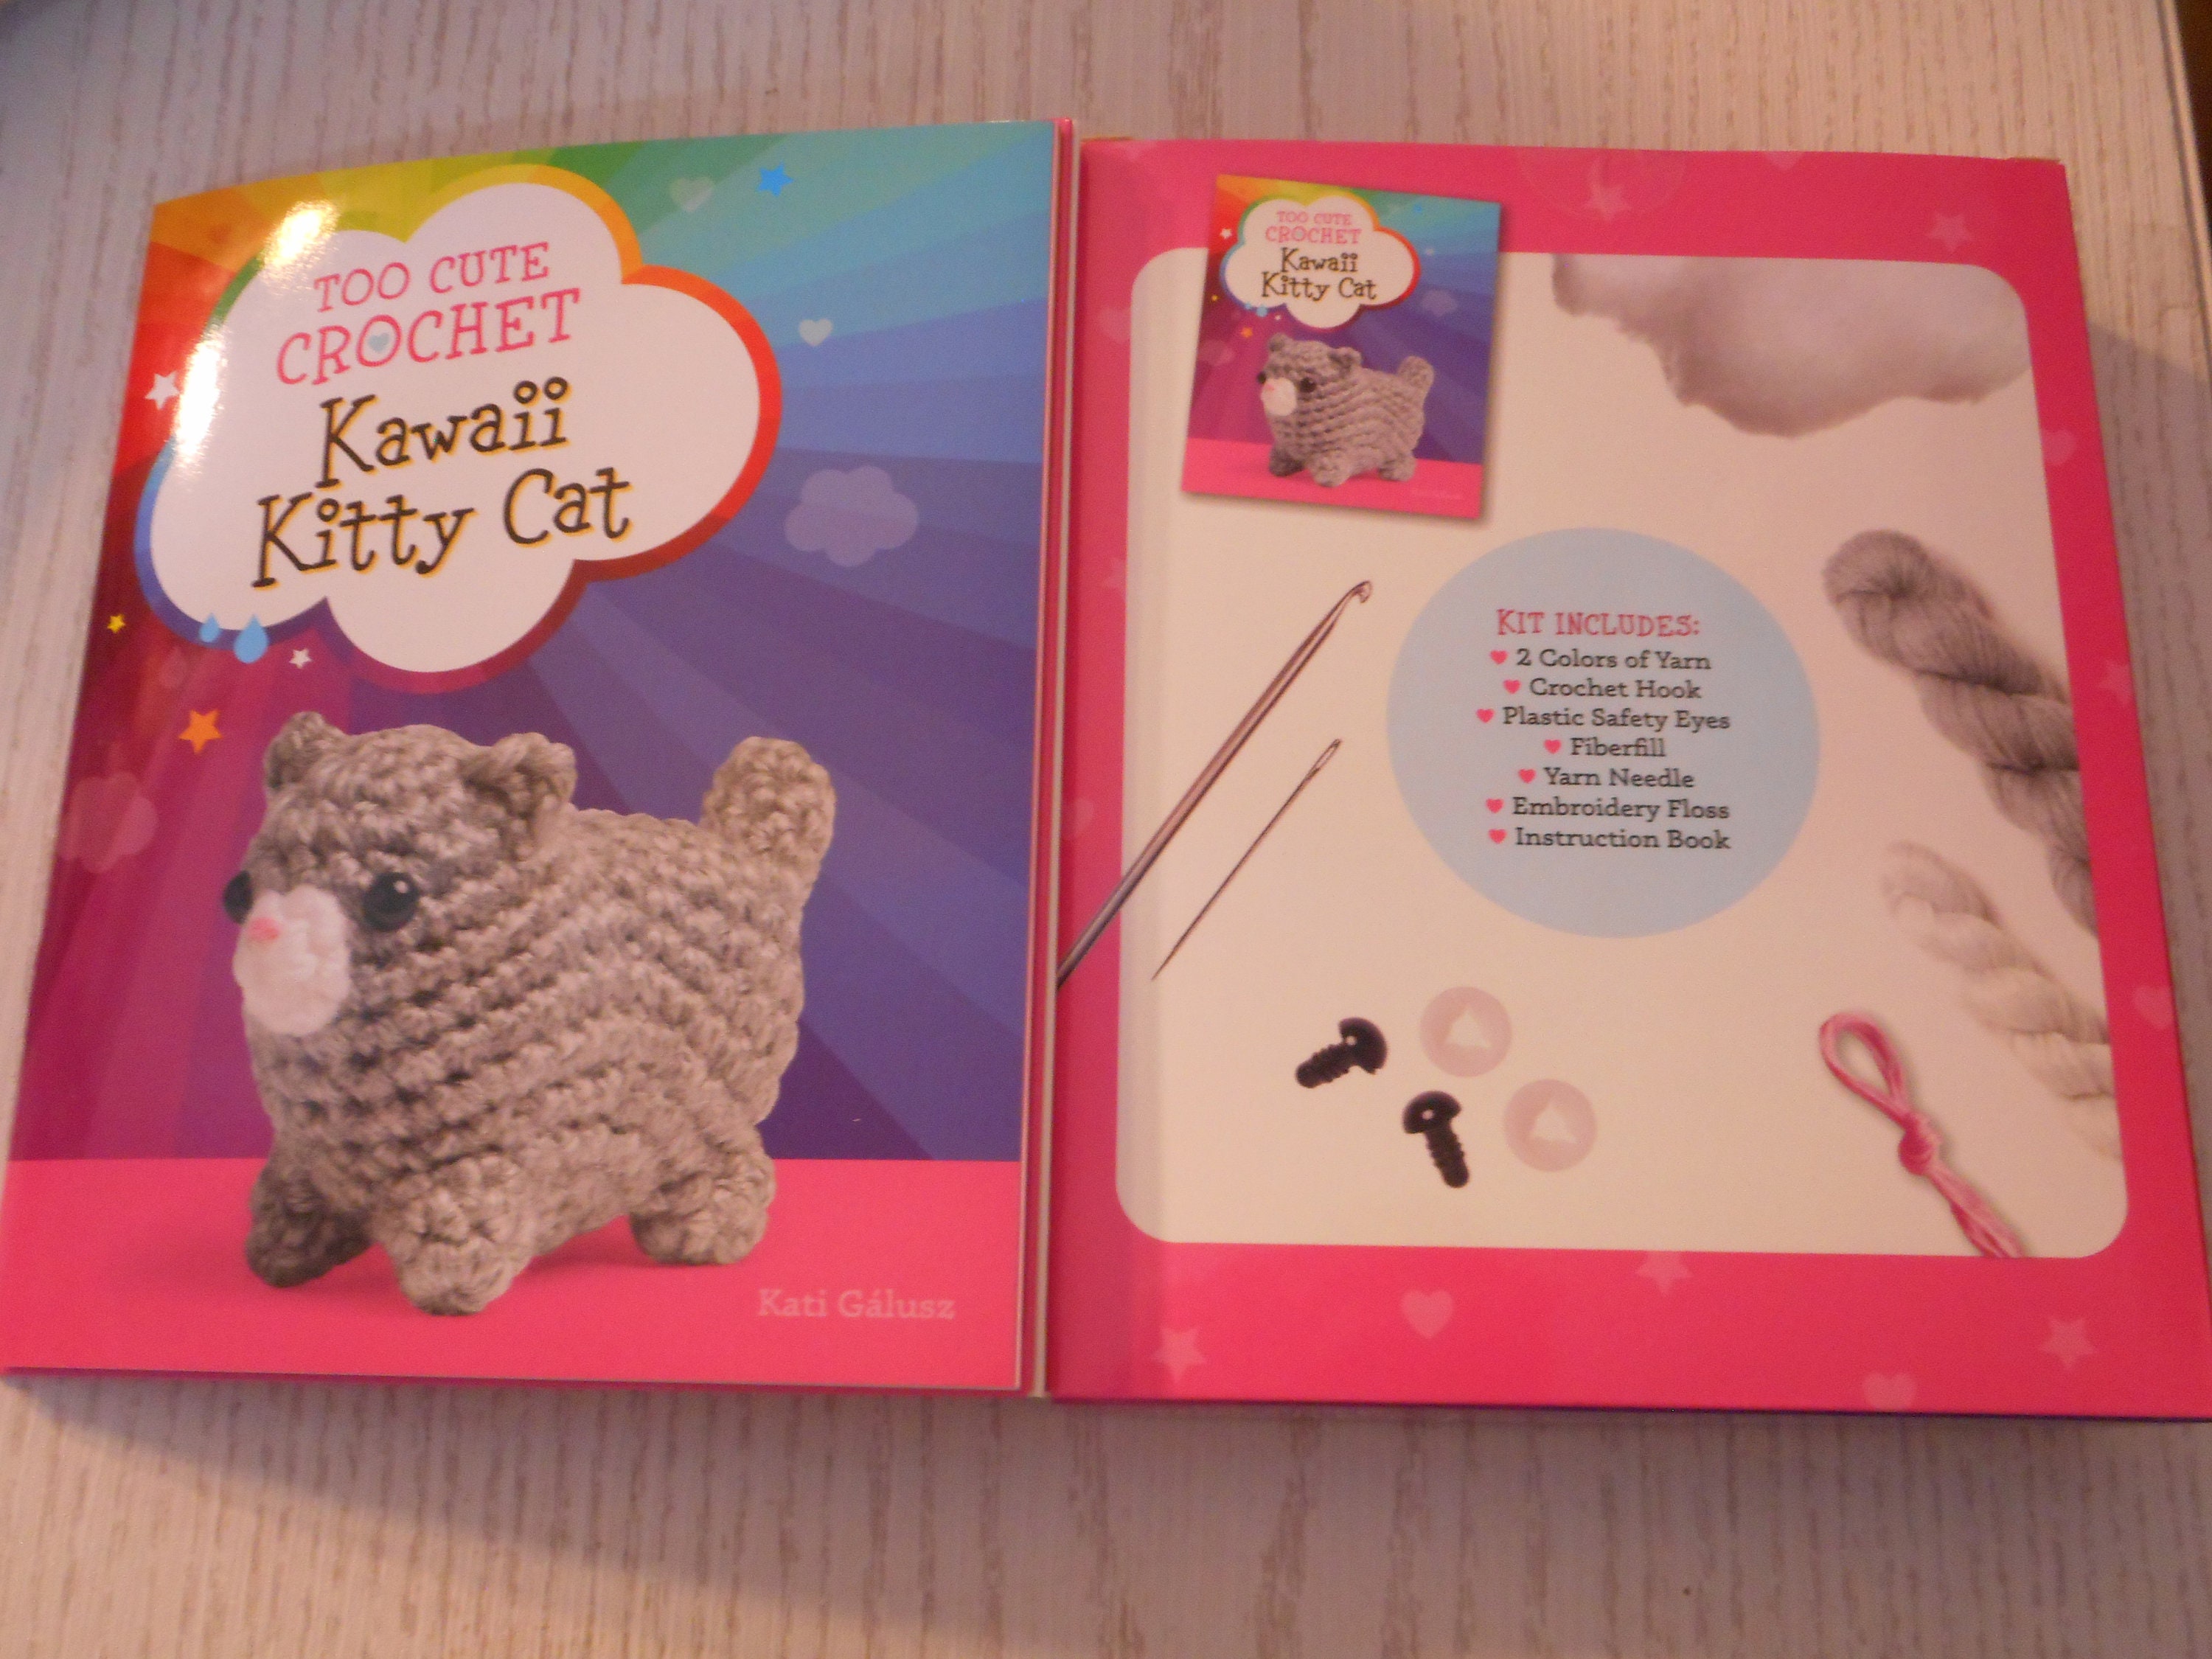 Too Cute Crochet: Kawaii Kitty Cat: Kit Includes: 2 Colors of Yarn, Crochet  Hook, Plastic Safety Eyes, Fiberfill, Yarn Needle, Embroidery Floss,  Instruction Book (Kit)